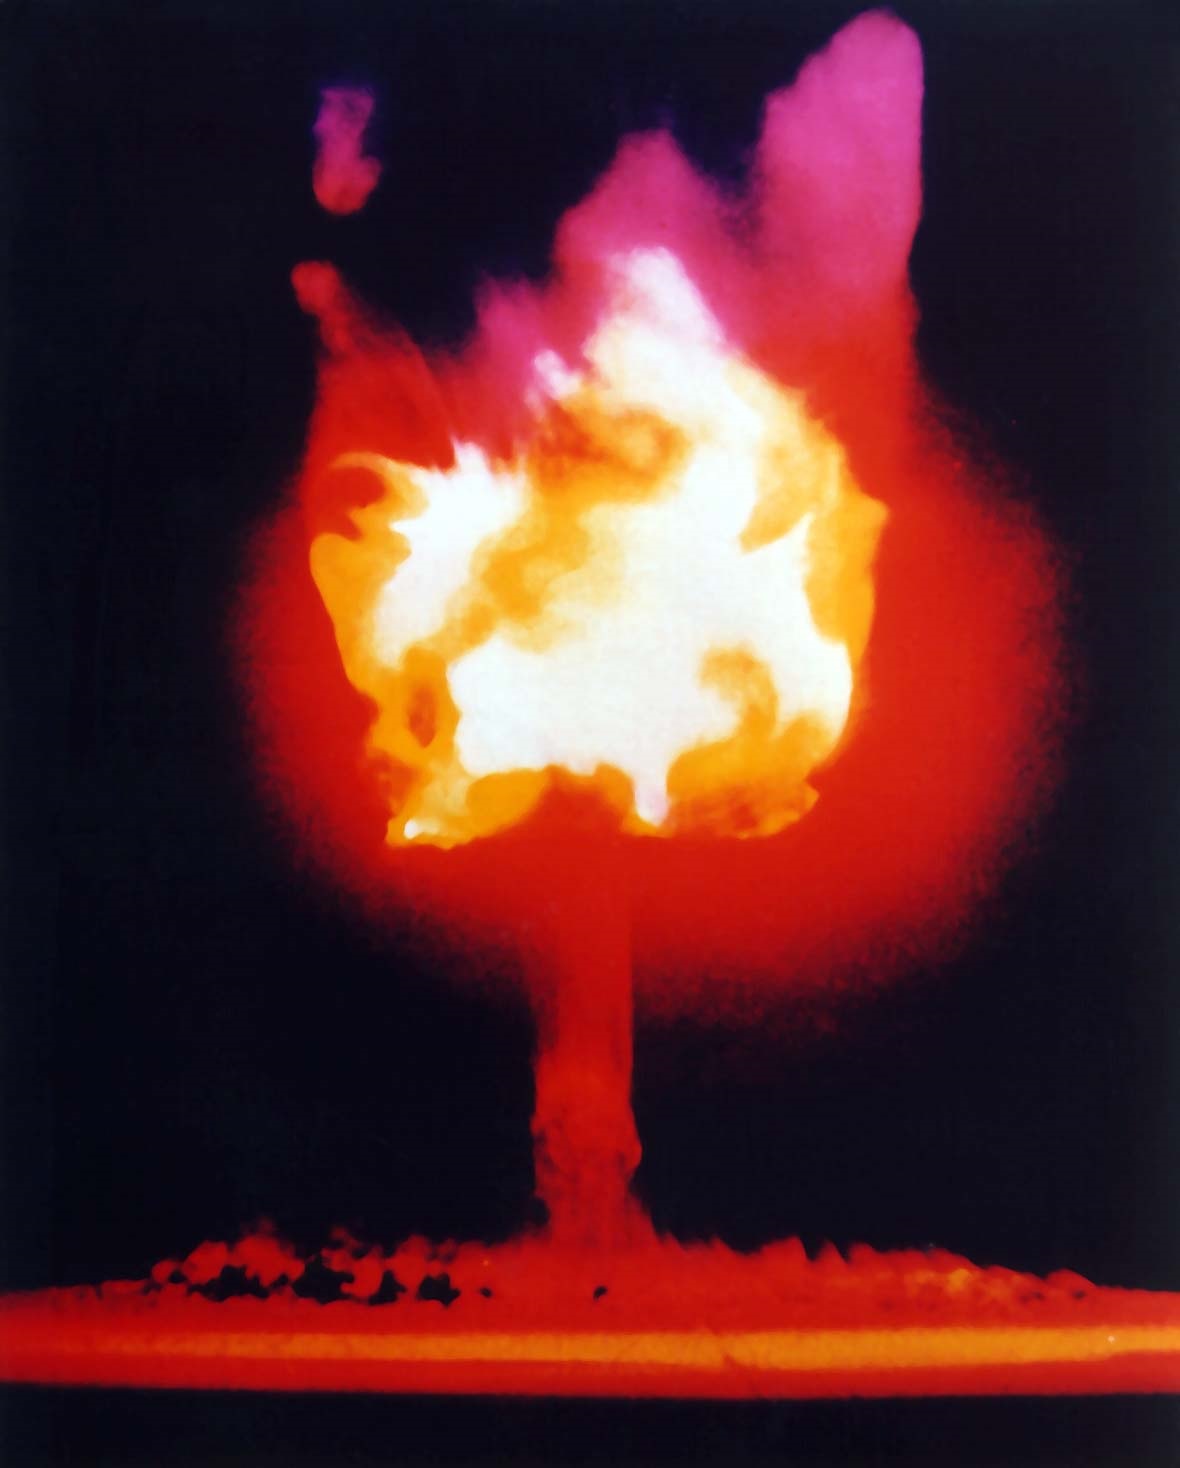  . Nuclear explosion